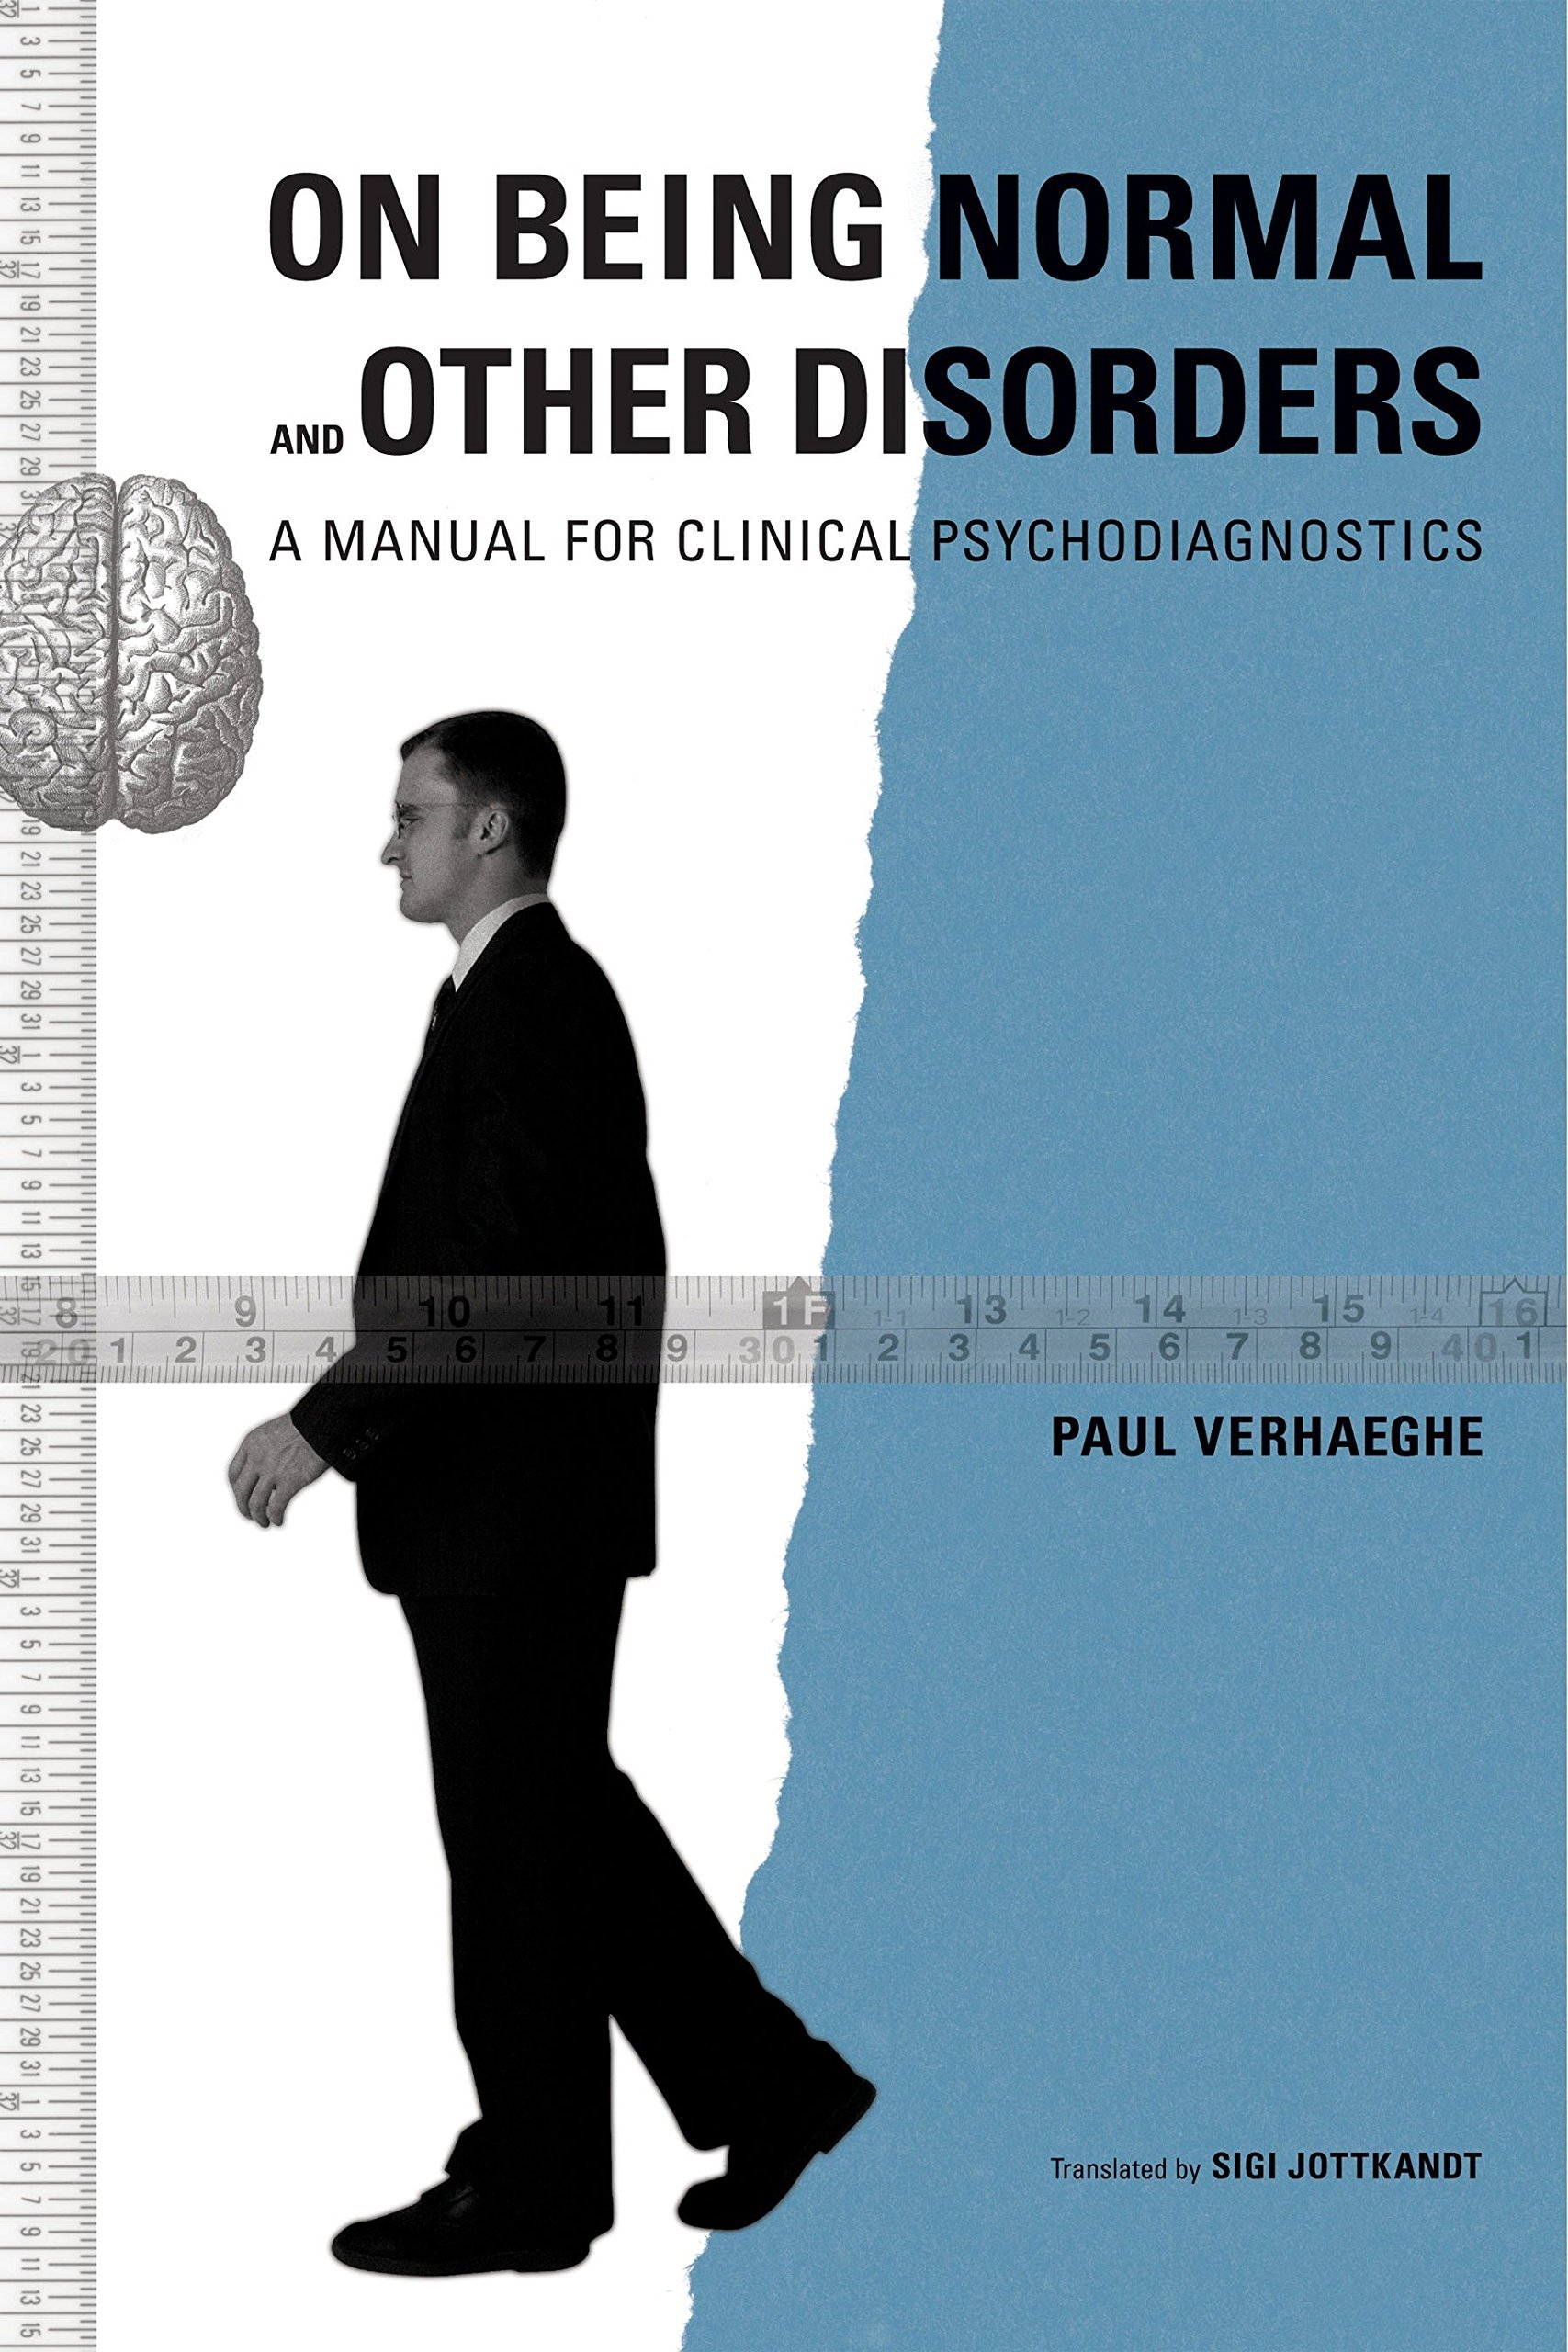 Paul-verhaeghe-on-being-normal-and-other-disorders.jpg